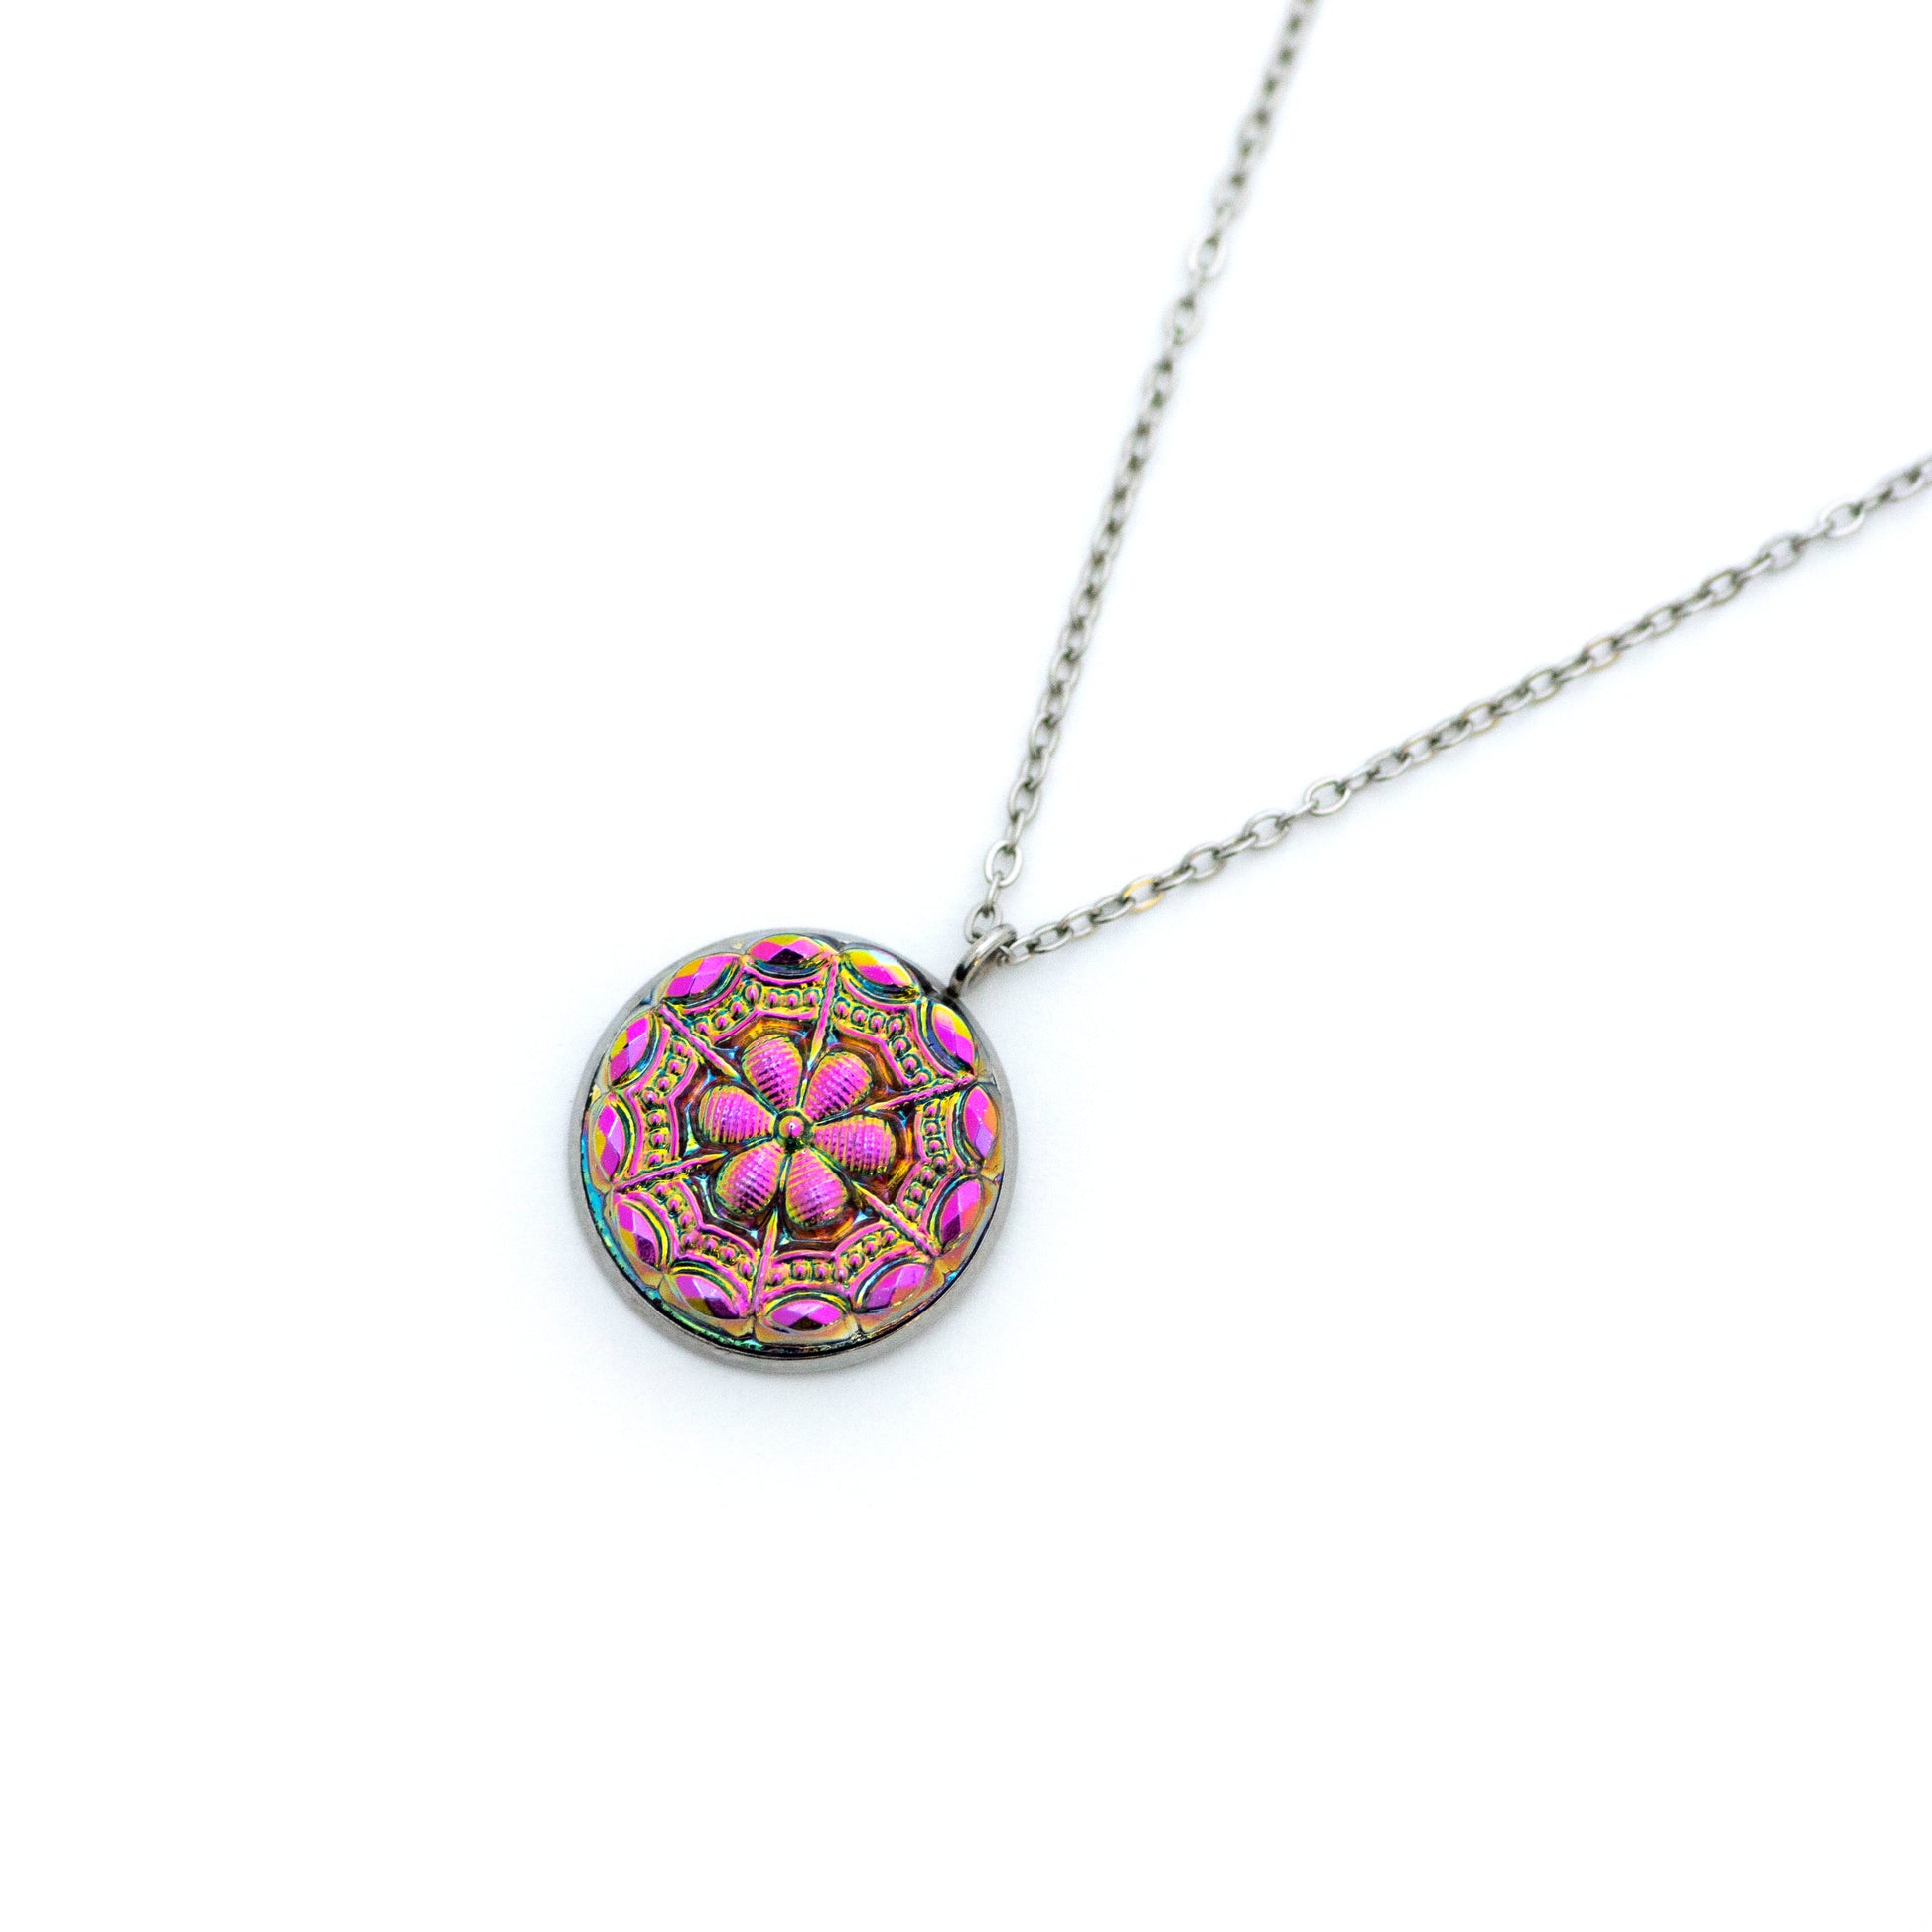 Flashy iridescent pink and green Czech glass button. Button pendant necklace.